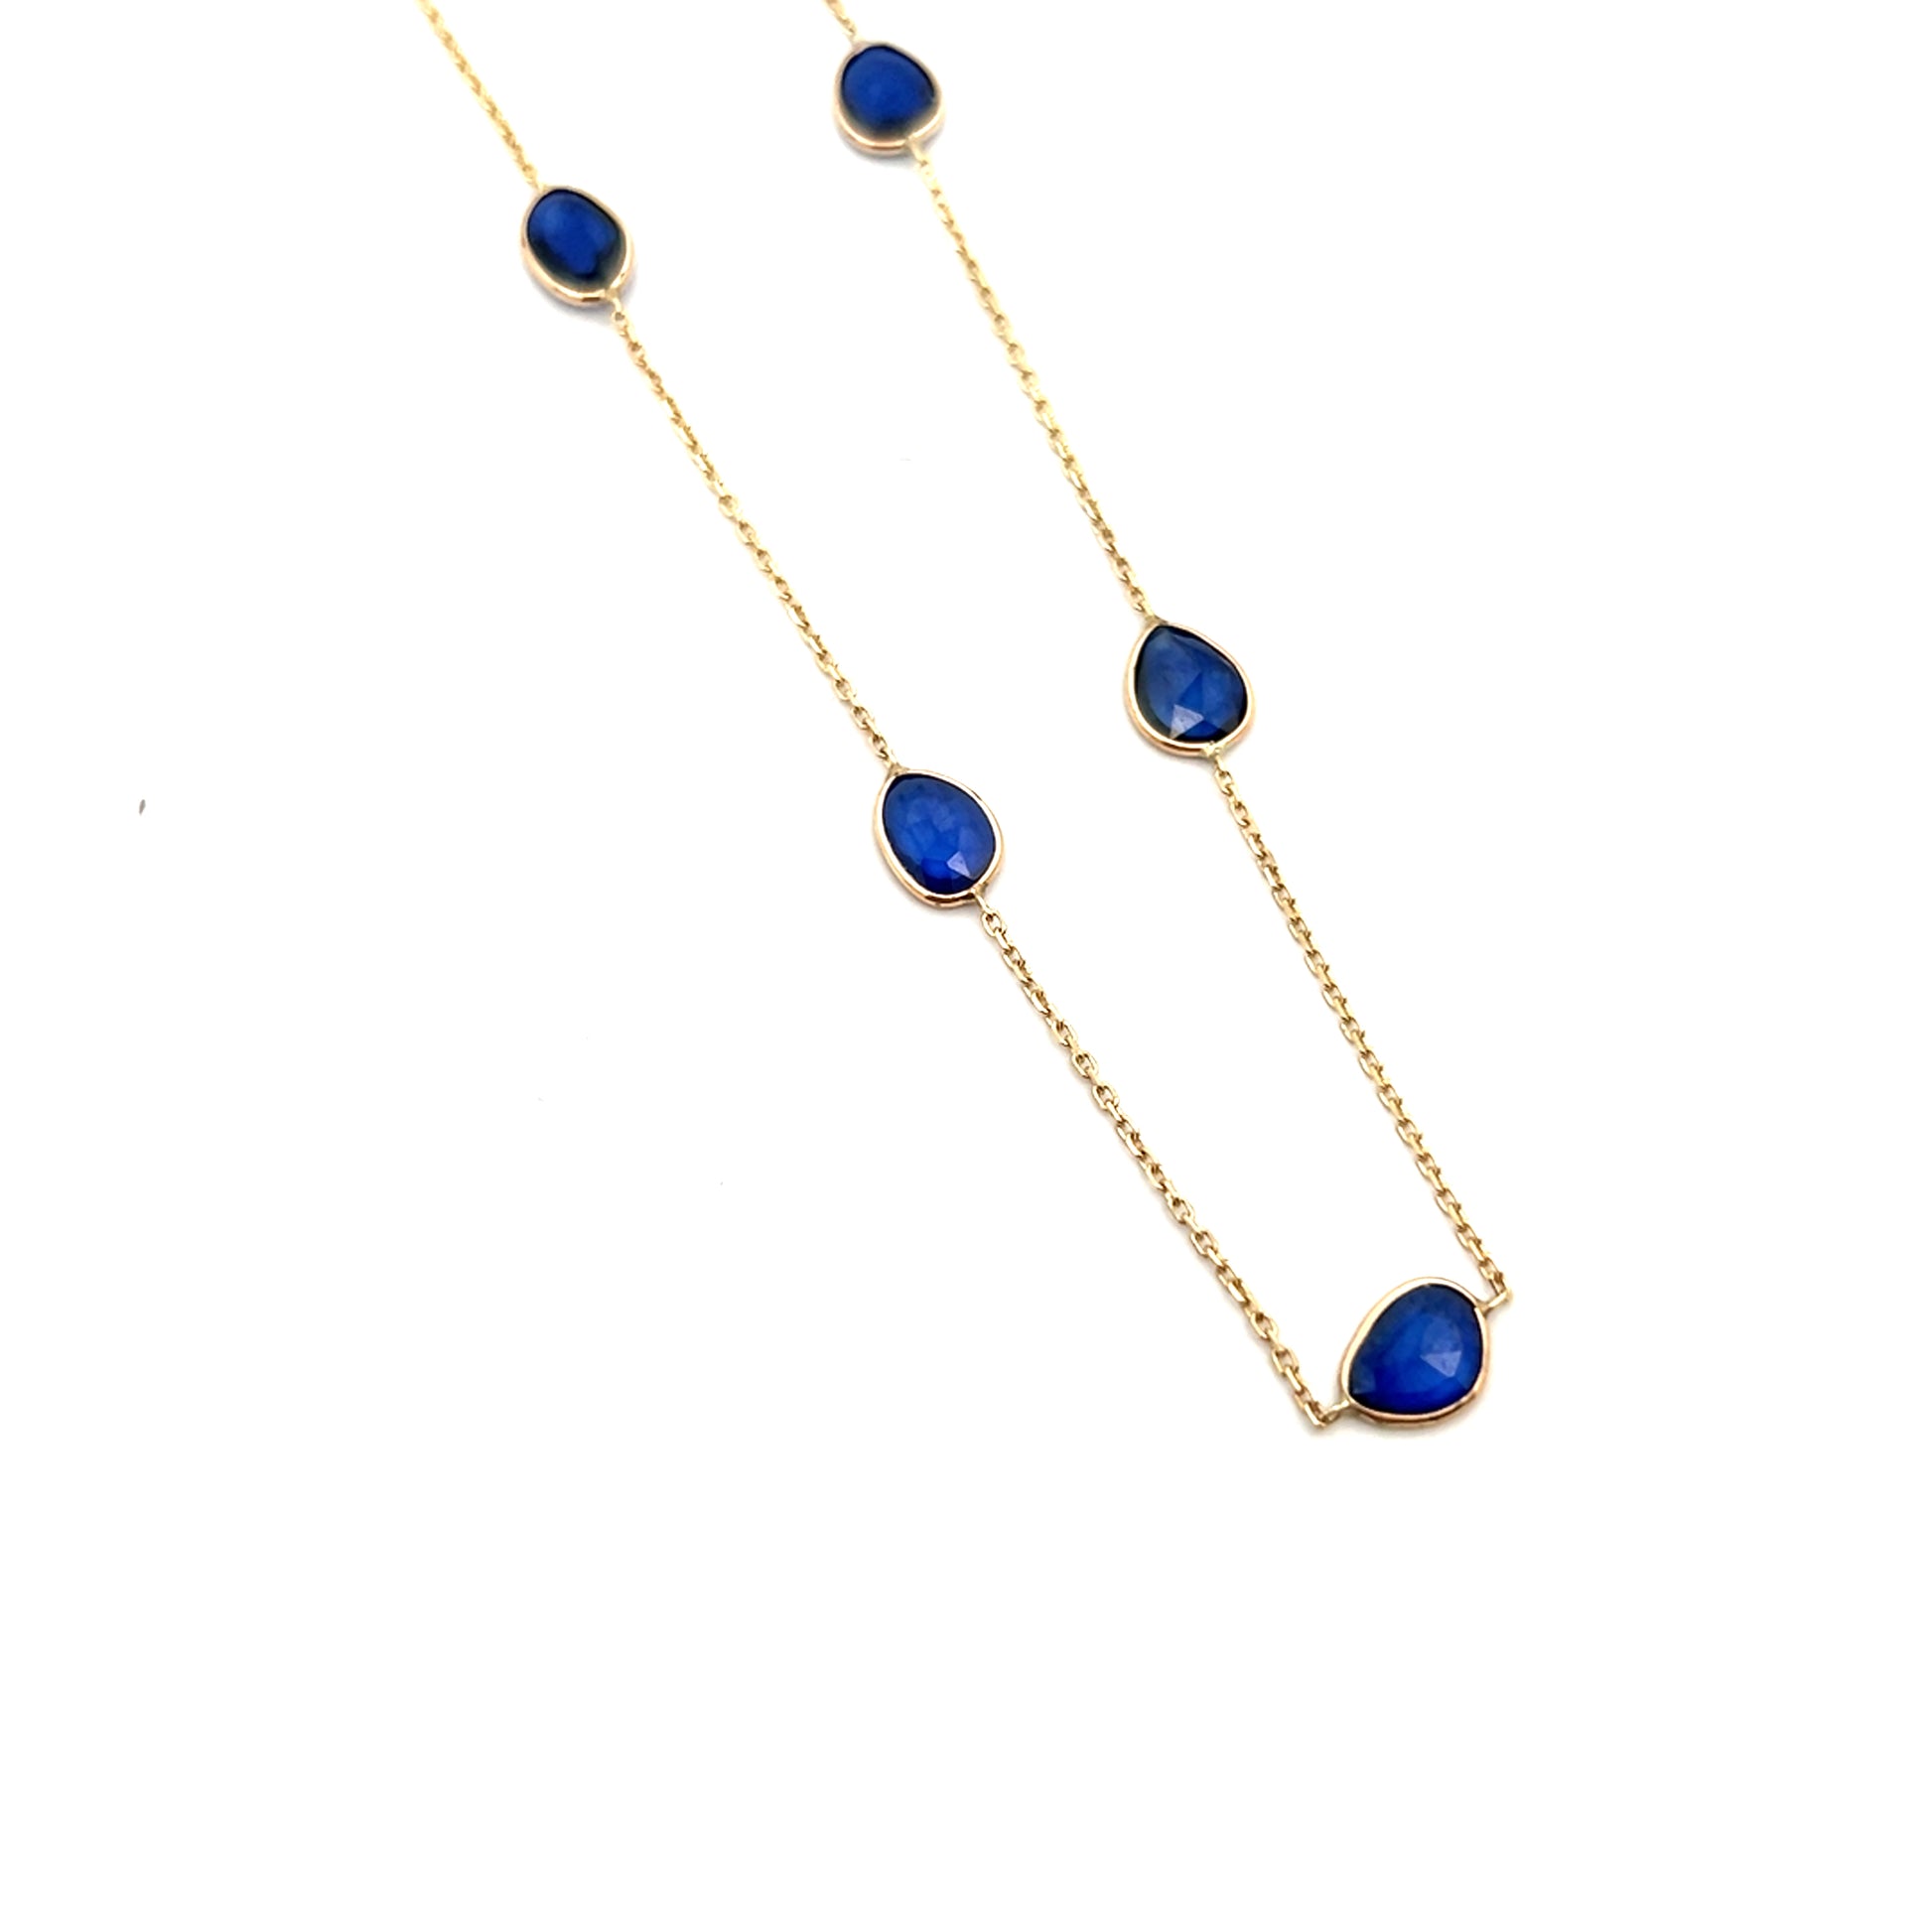 5cttw Gold Sapphire Necklace | Gemstone Necklace